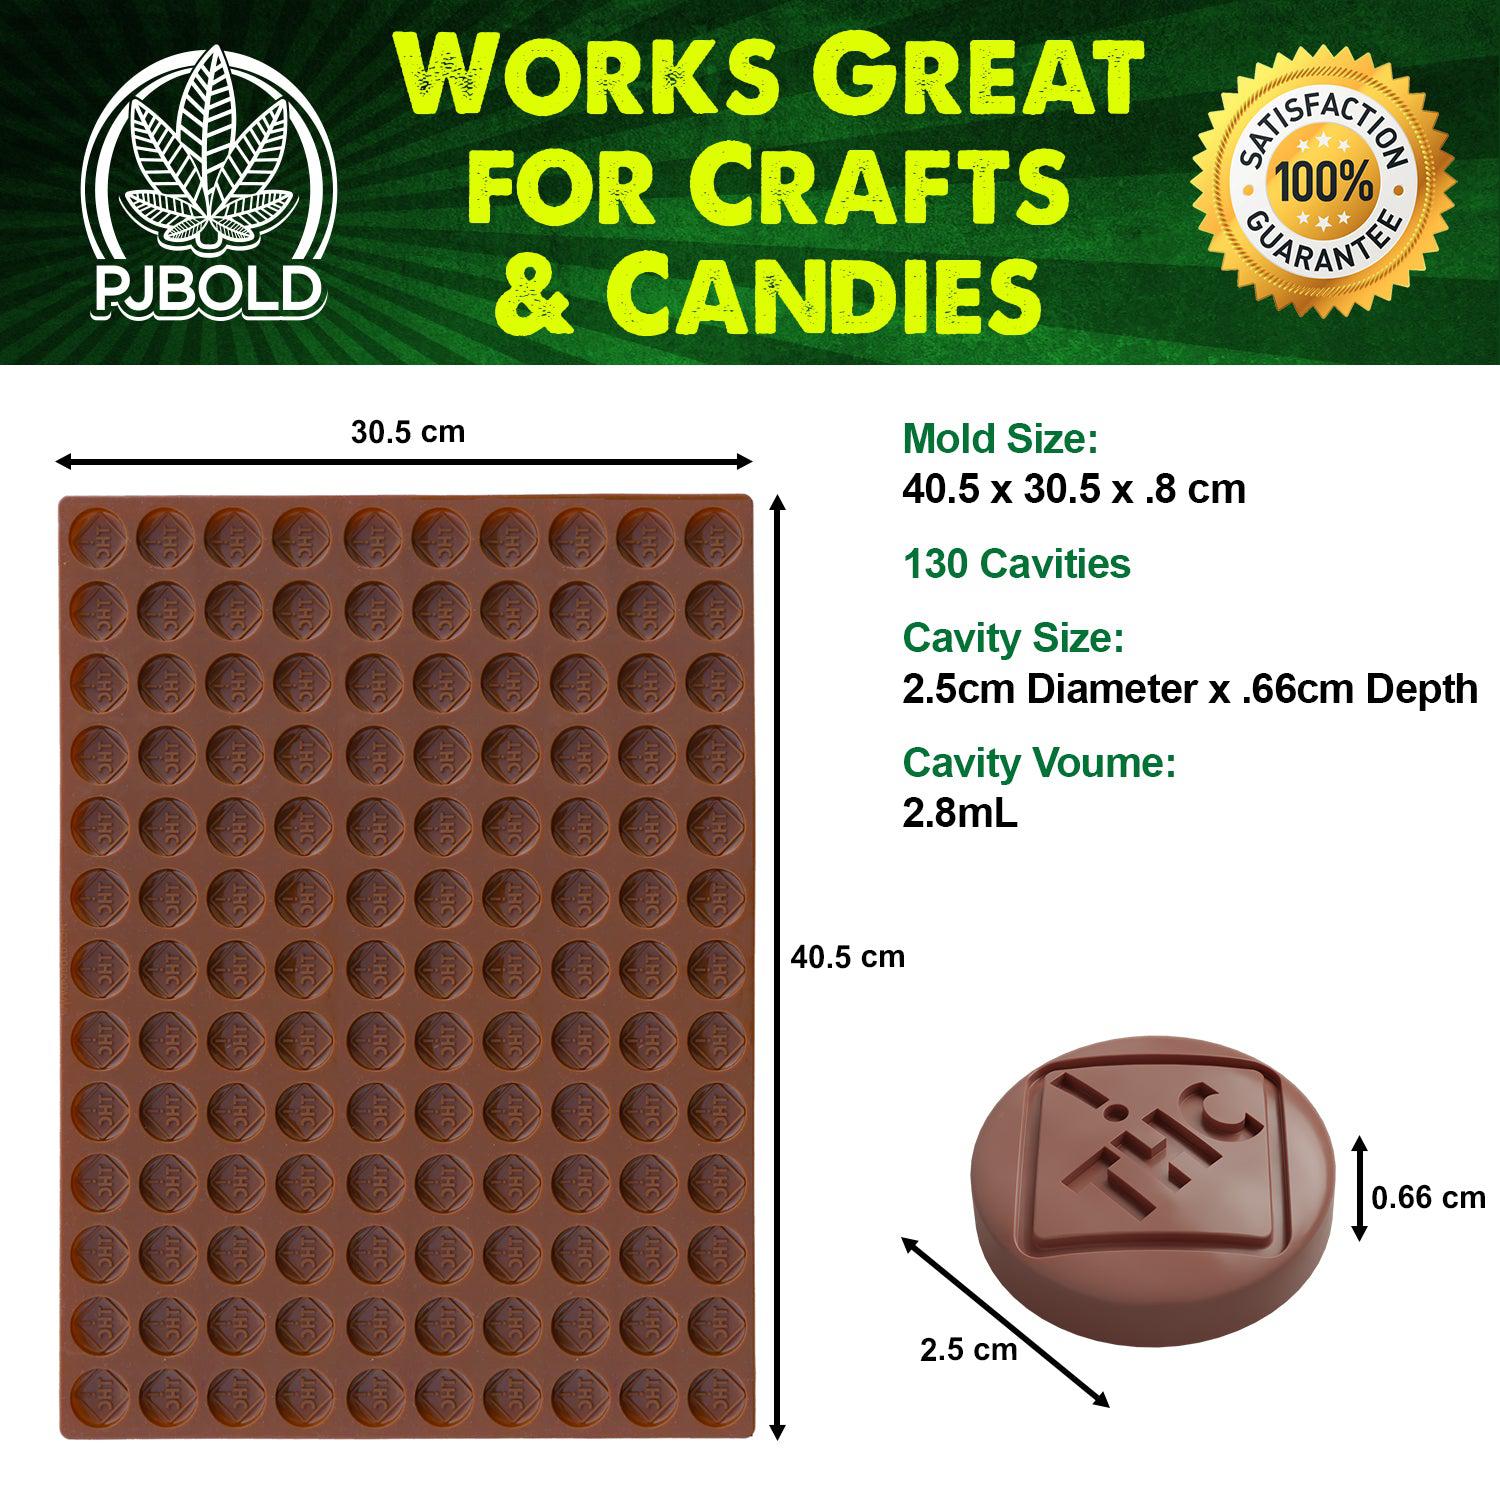 CO, FL, OH THC Round Candy Mold, 2.8mL, 130 Cavity, Half Sheet